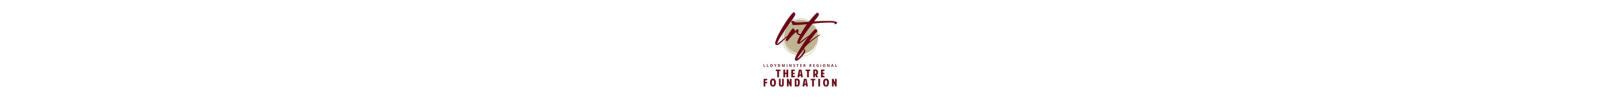 Lloydminster Regional Theatre Foundation